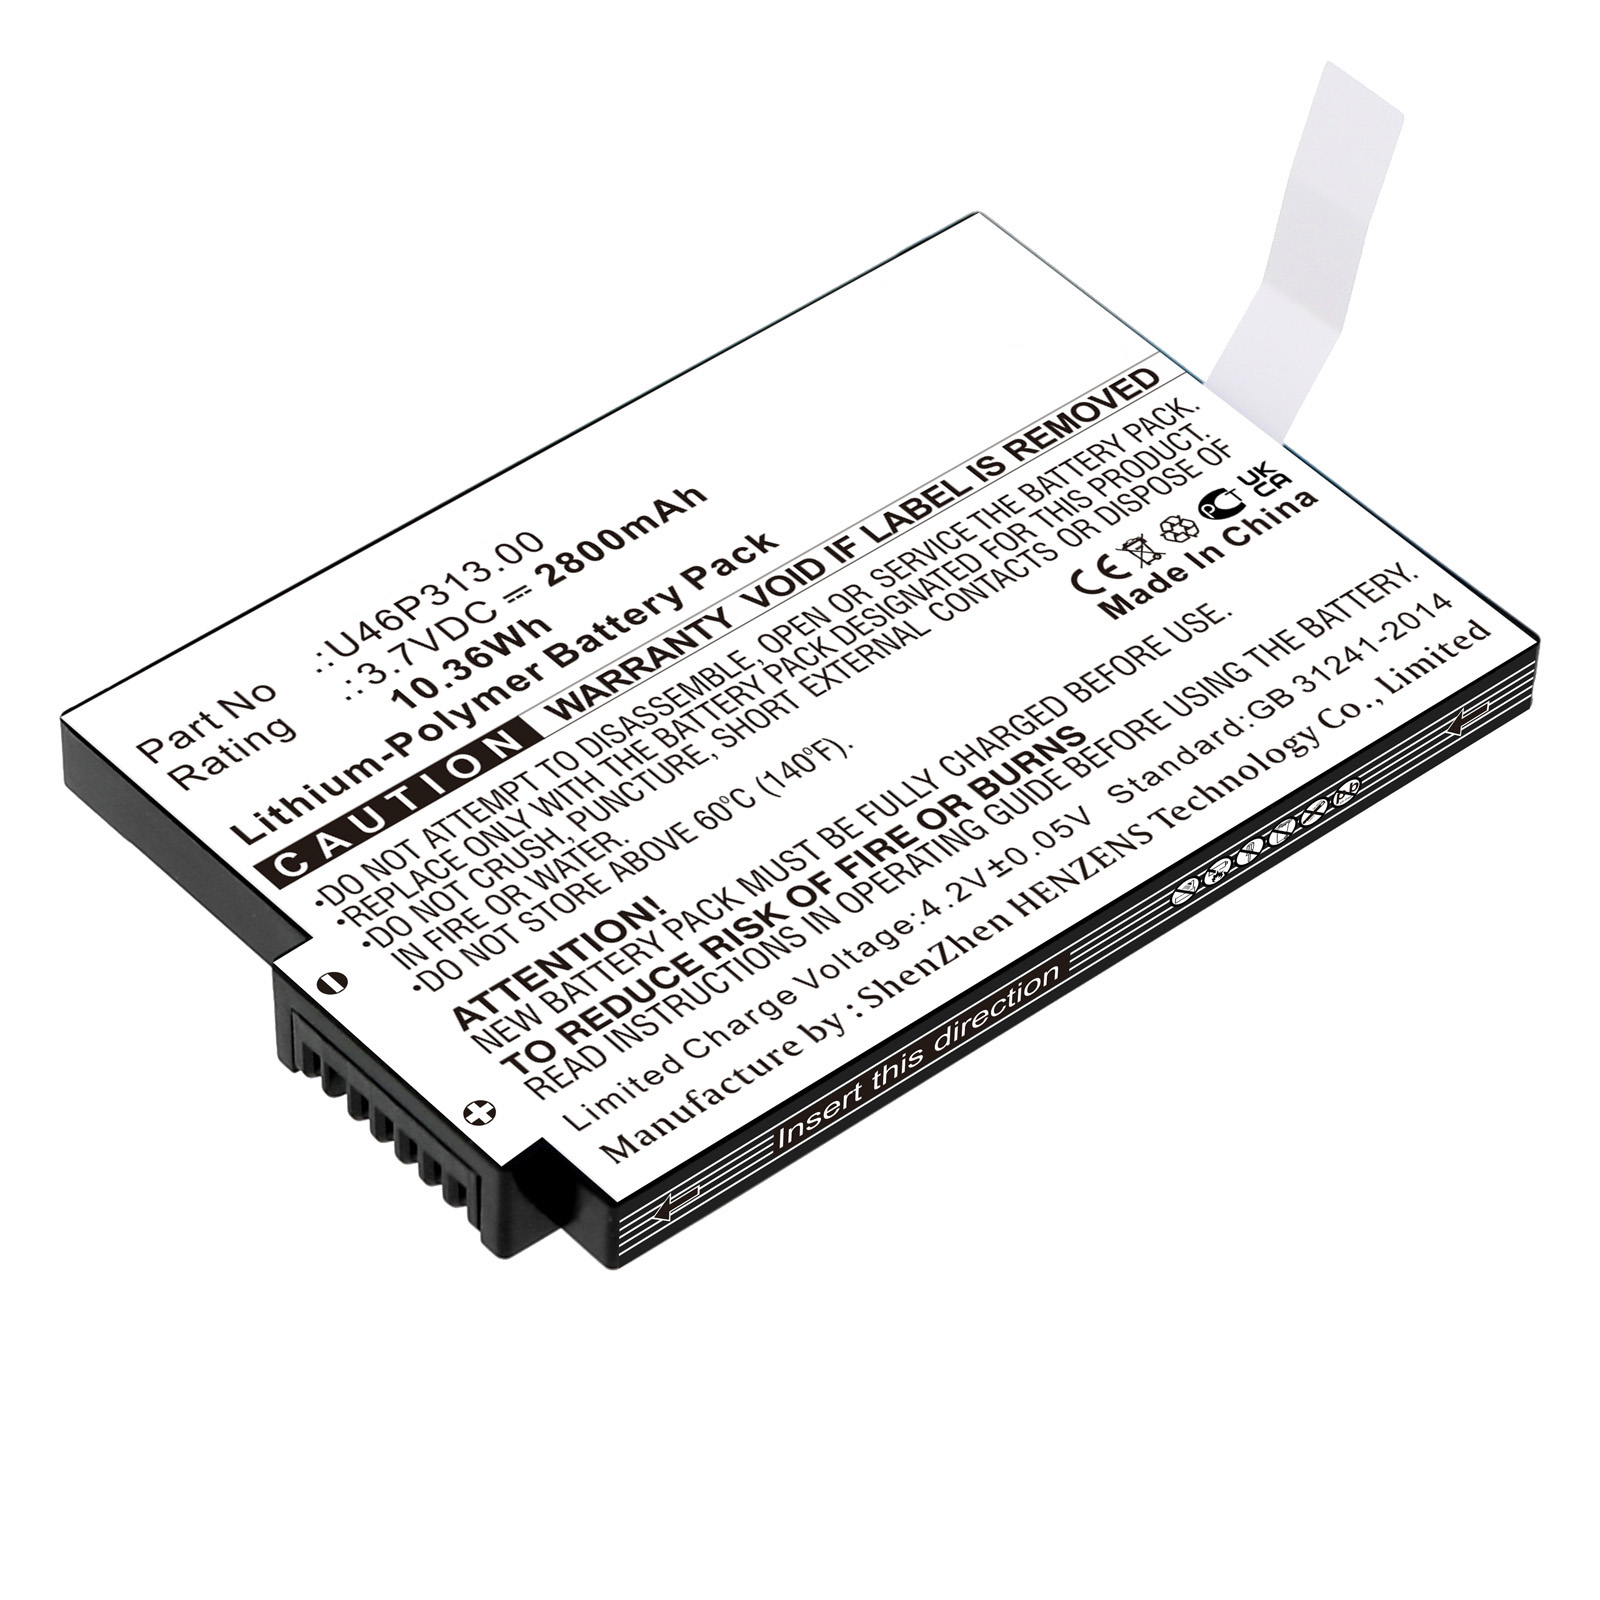 Synergy Digital Alarm System Battery, Compatible with Technicolor U46P313.00 Alarm System Battery (Li-Pol, 3.7V, 2800mAh)